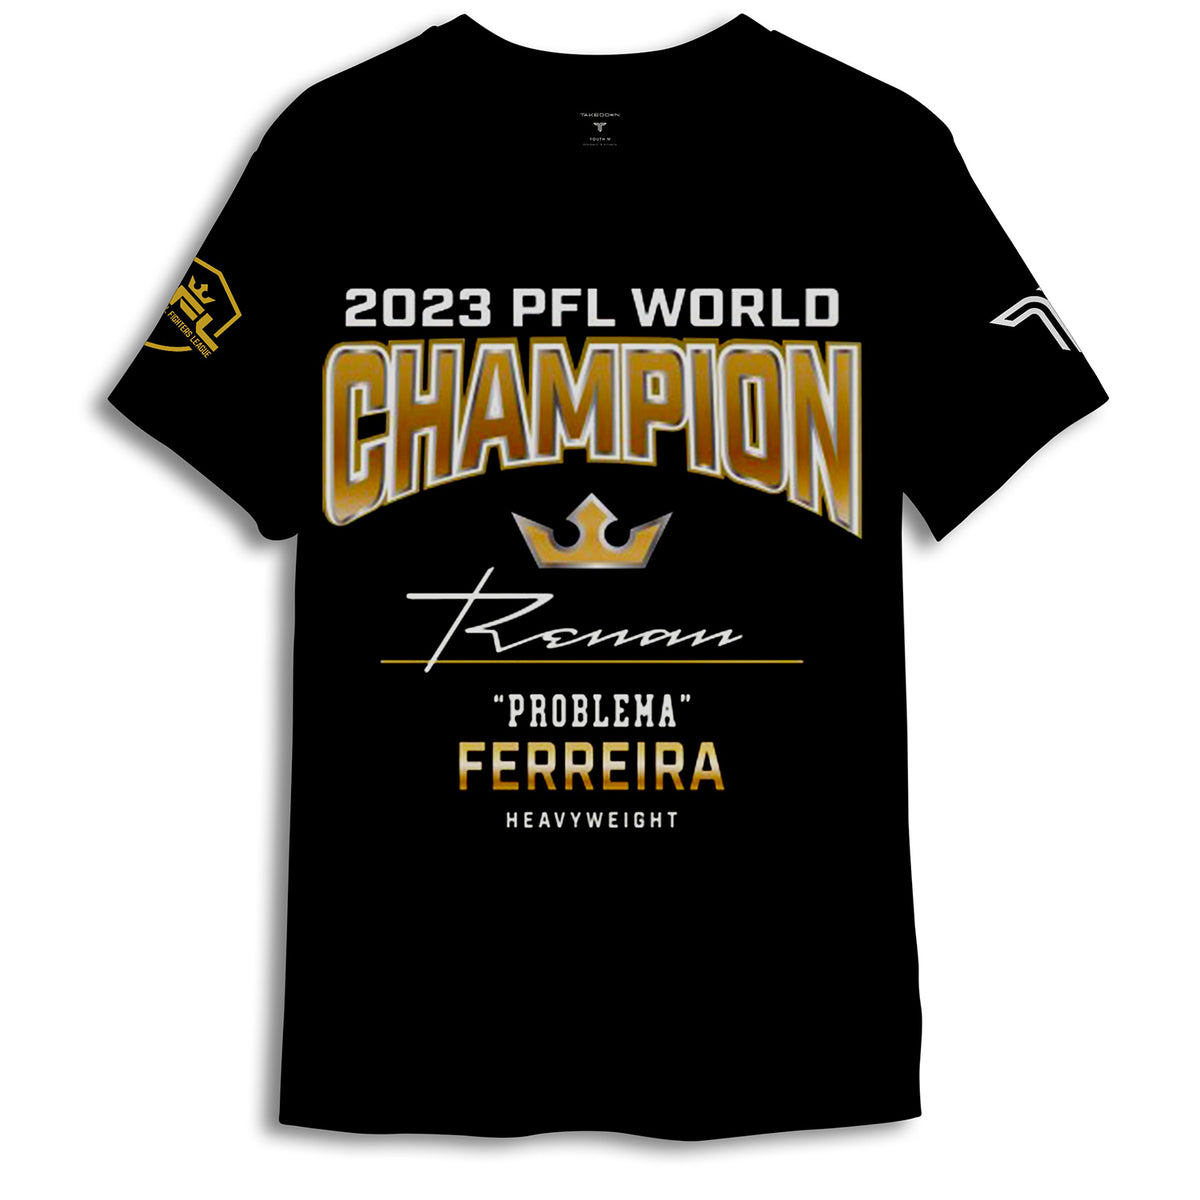 PFL Heavyweight Champion T-Shirt - Renan Ferreira